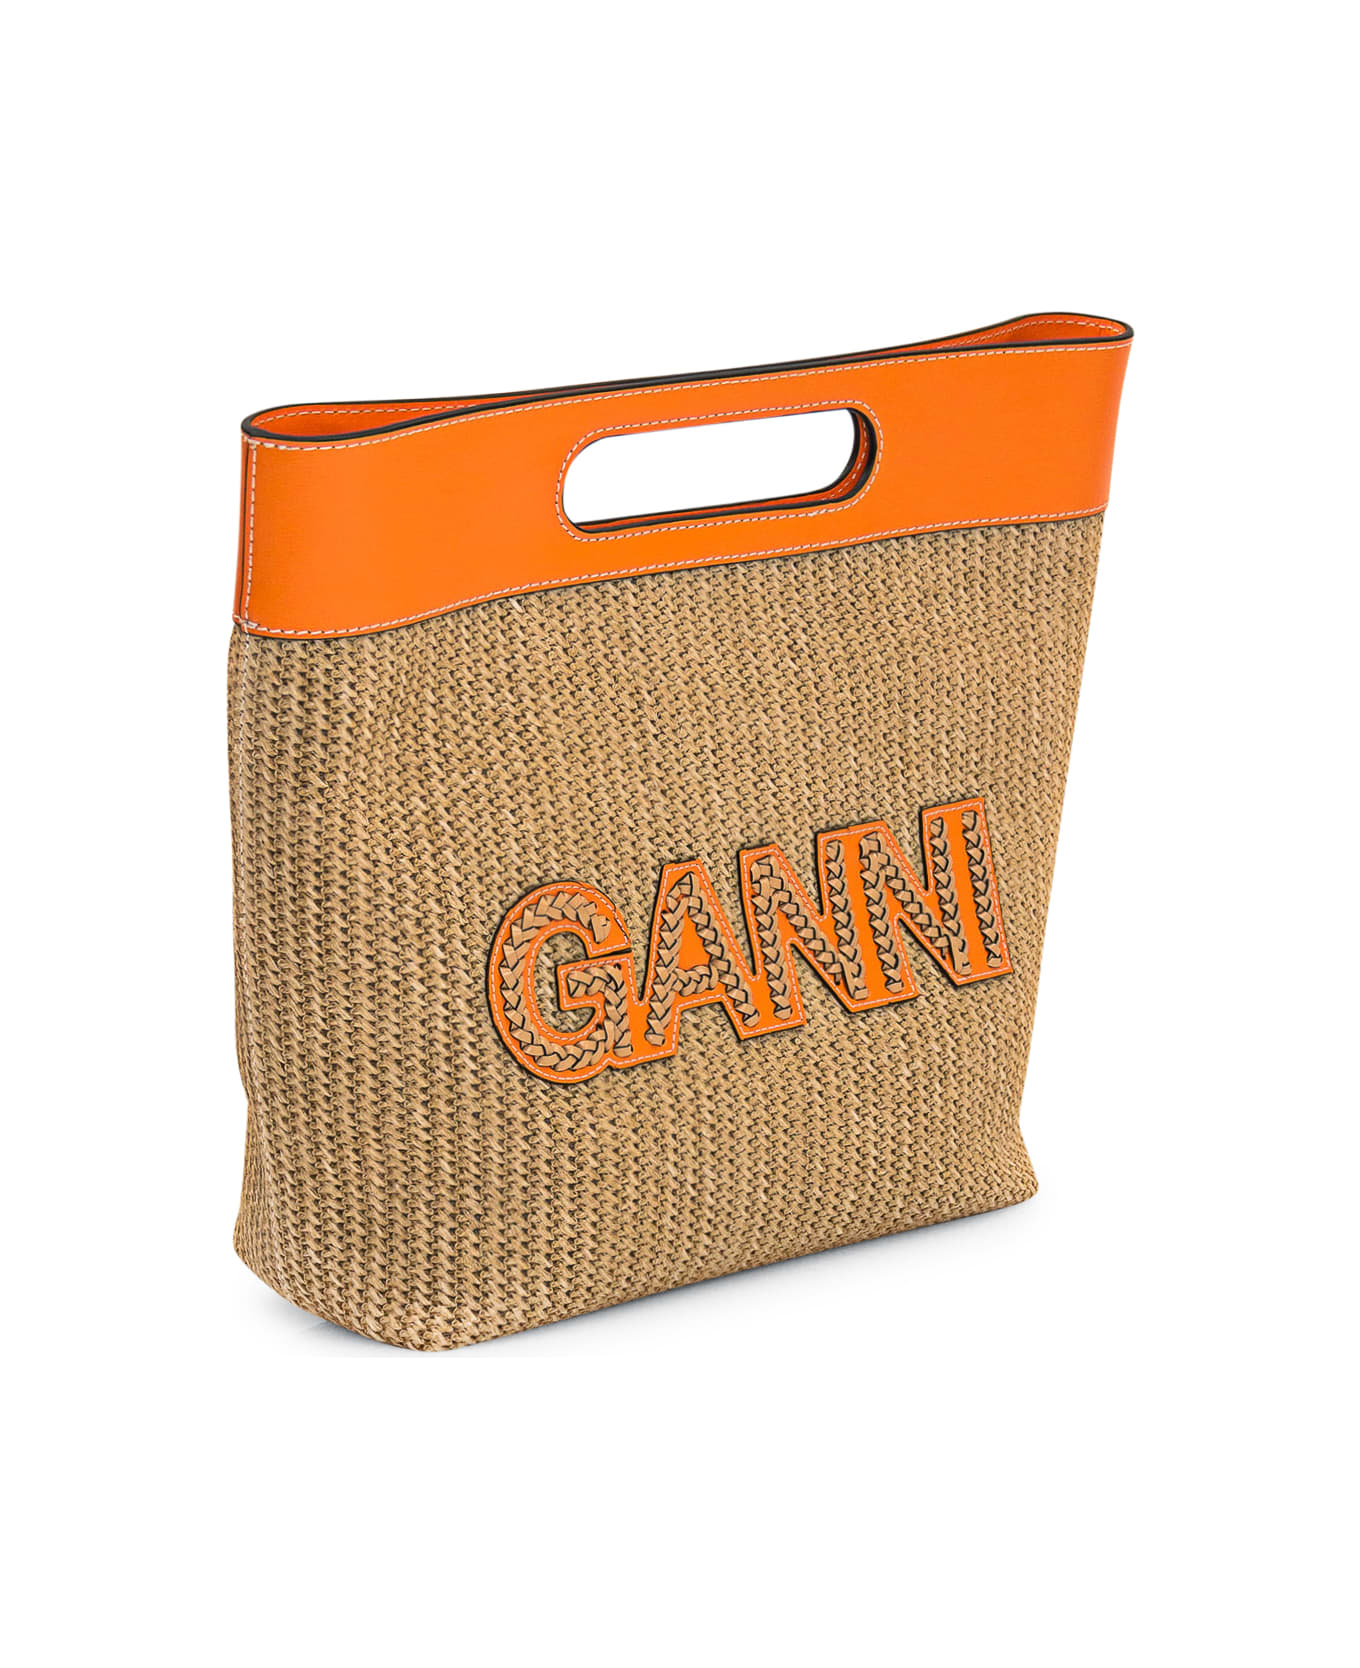 Ganni Medium Kraft Bag - VIBRANT ORANGE